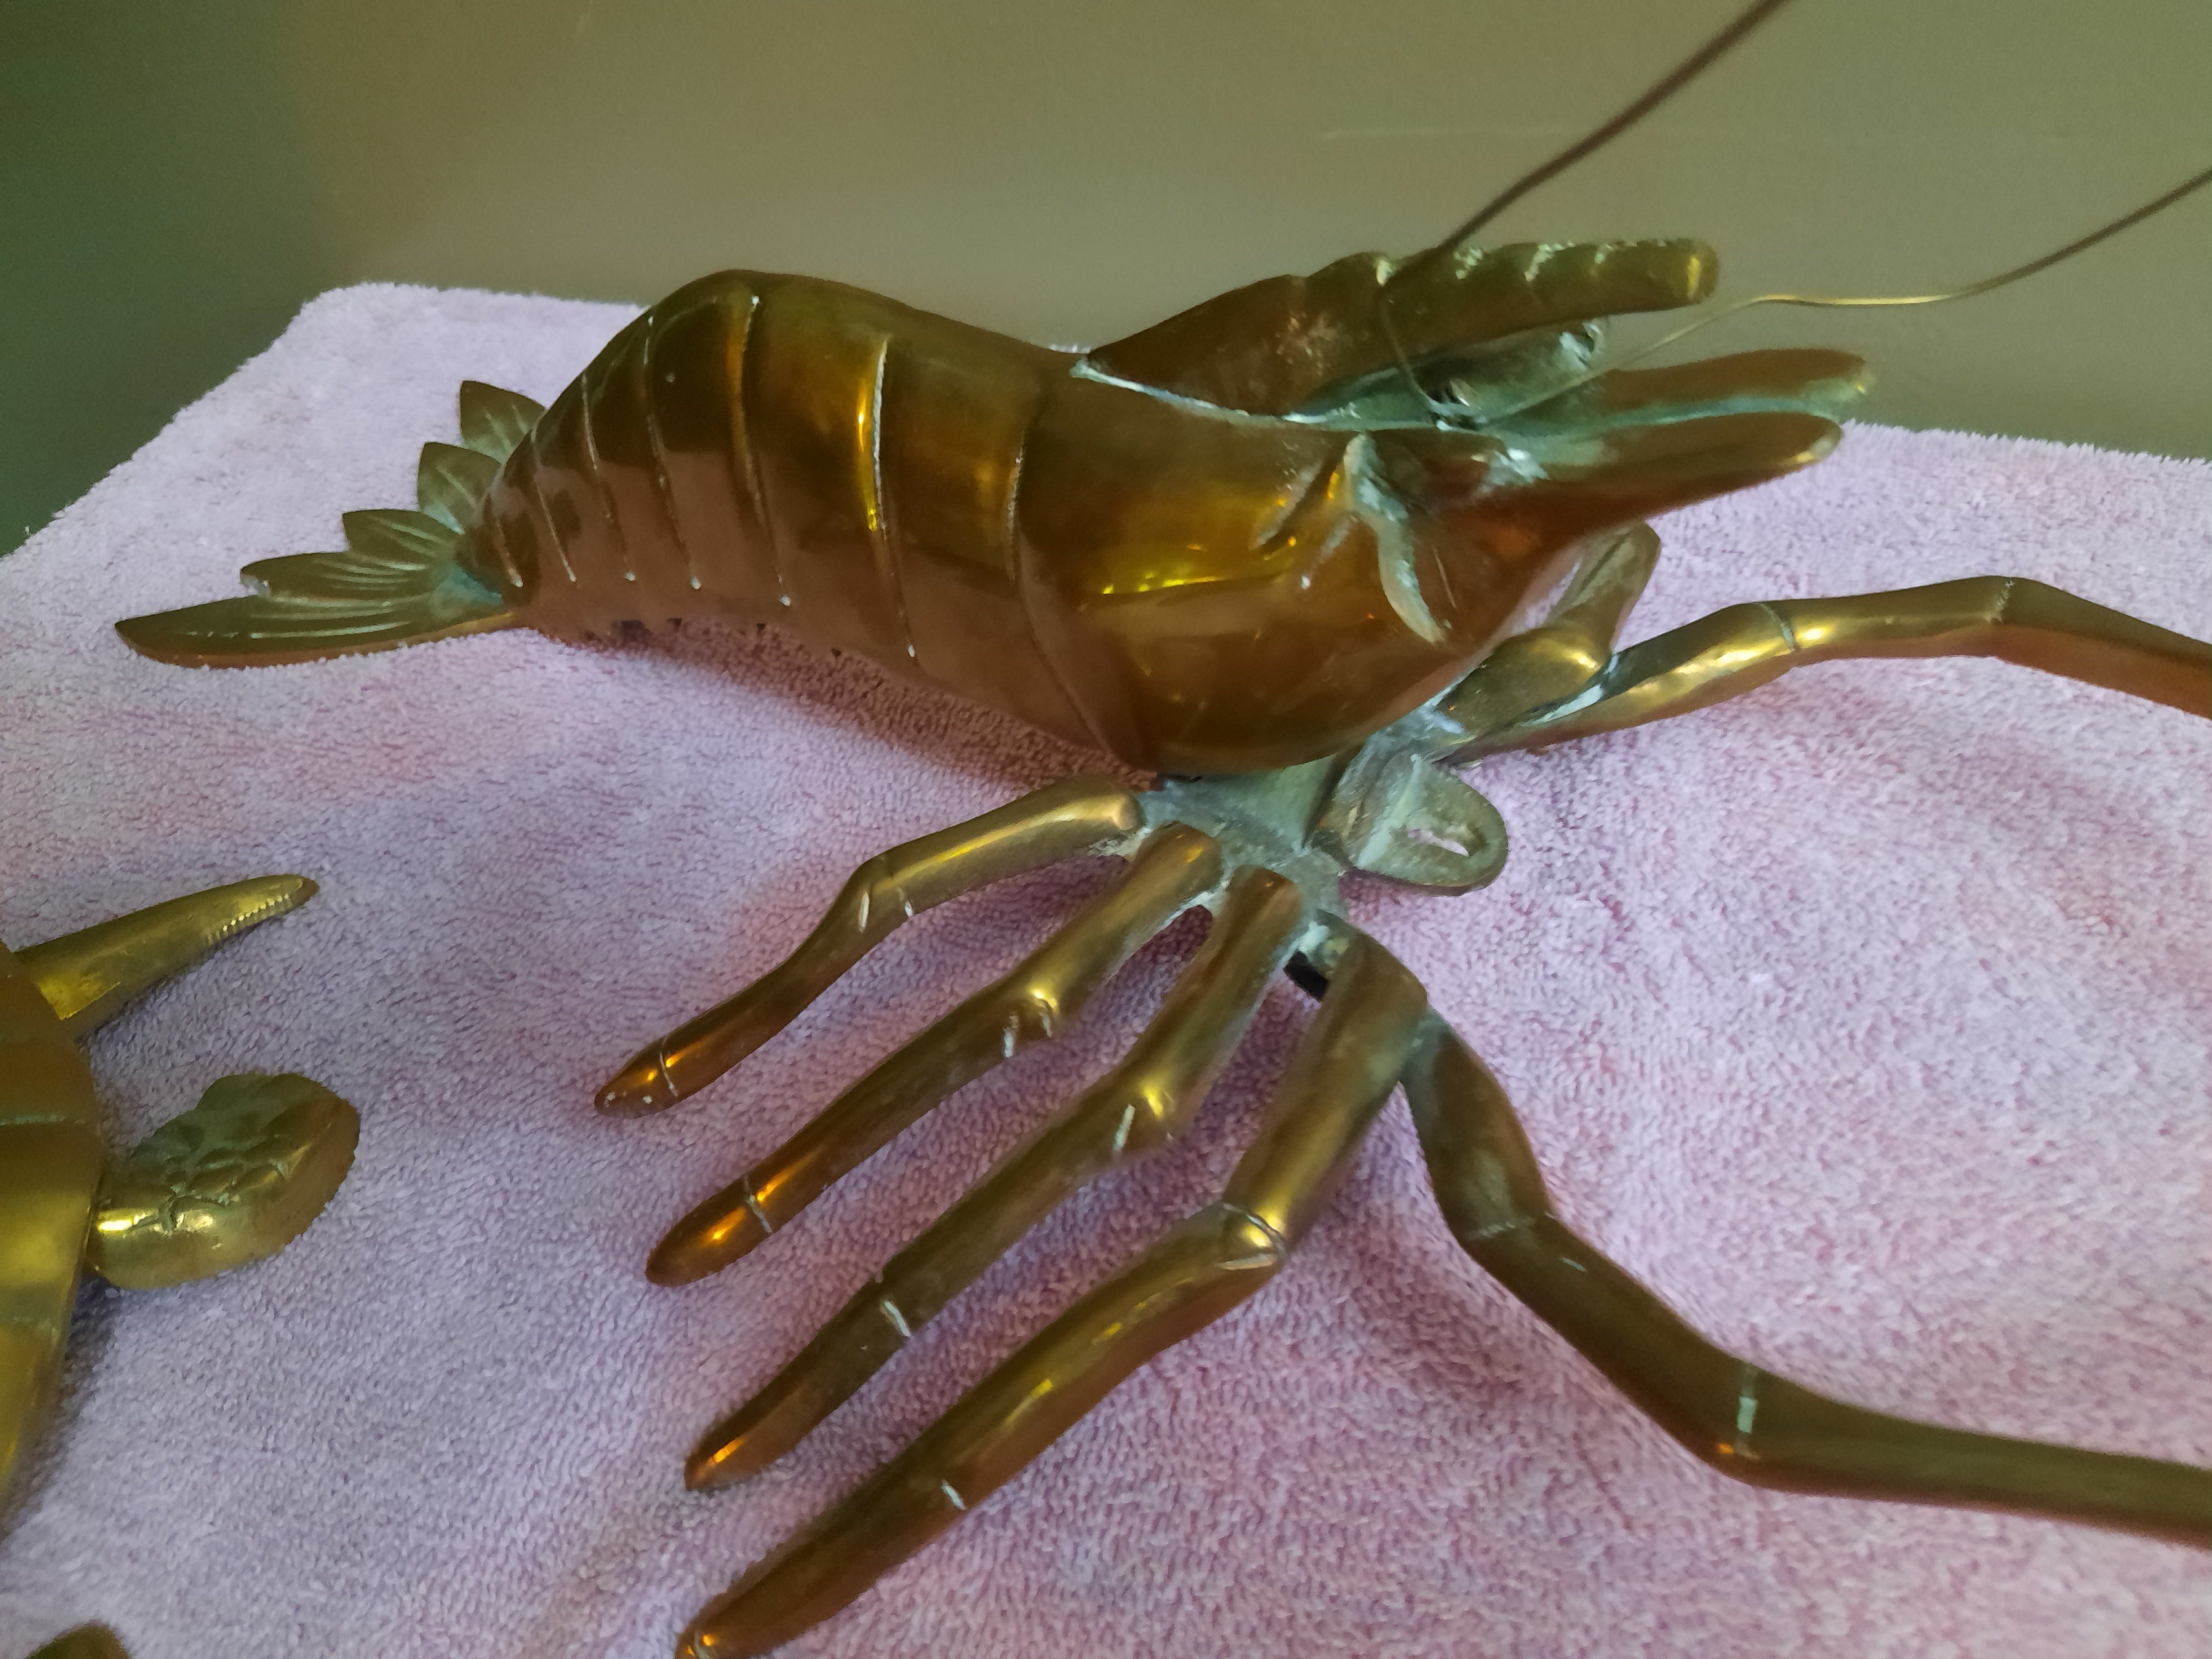 Brass Lobster